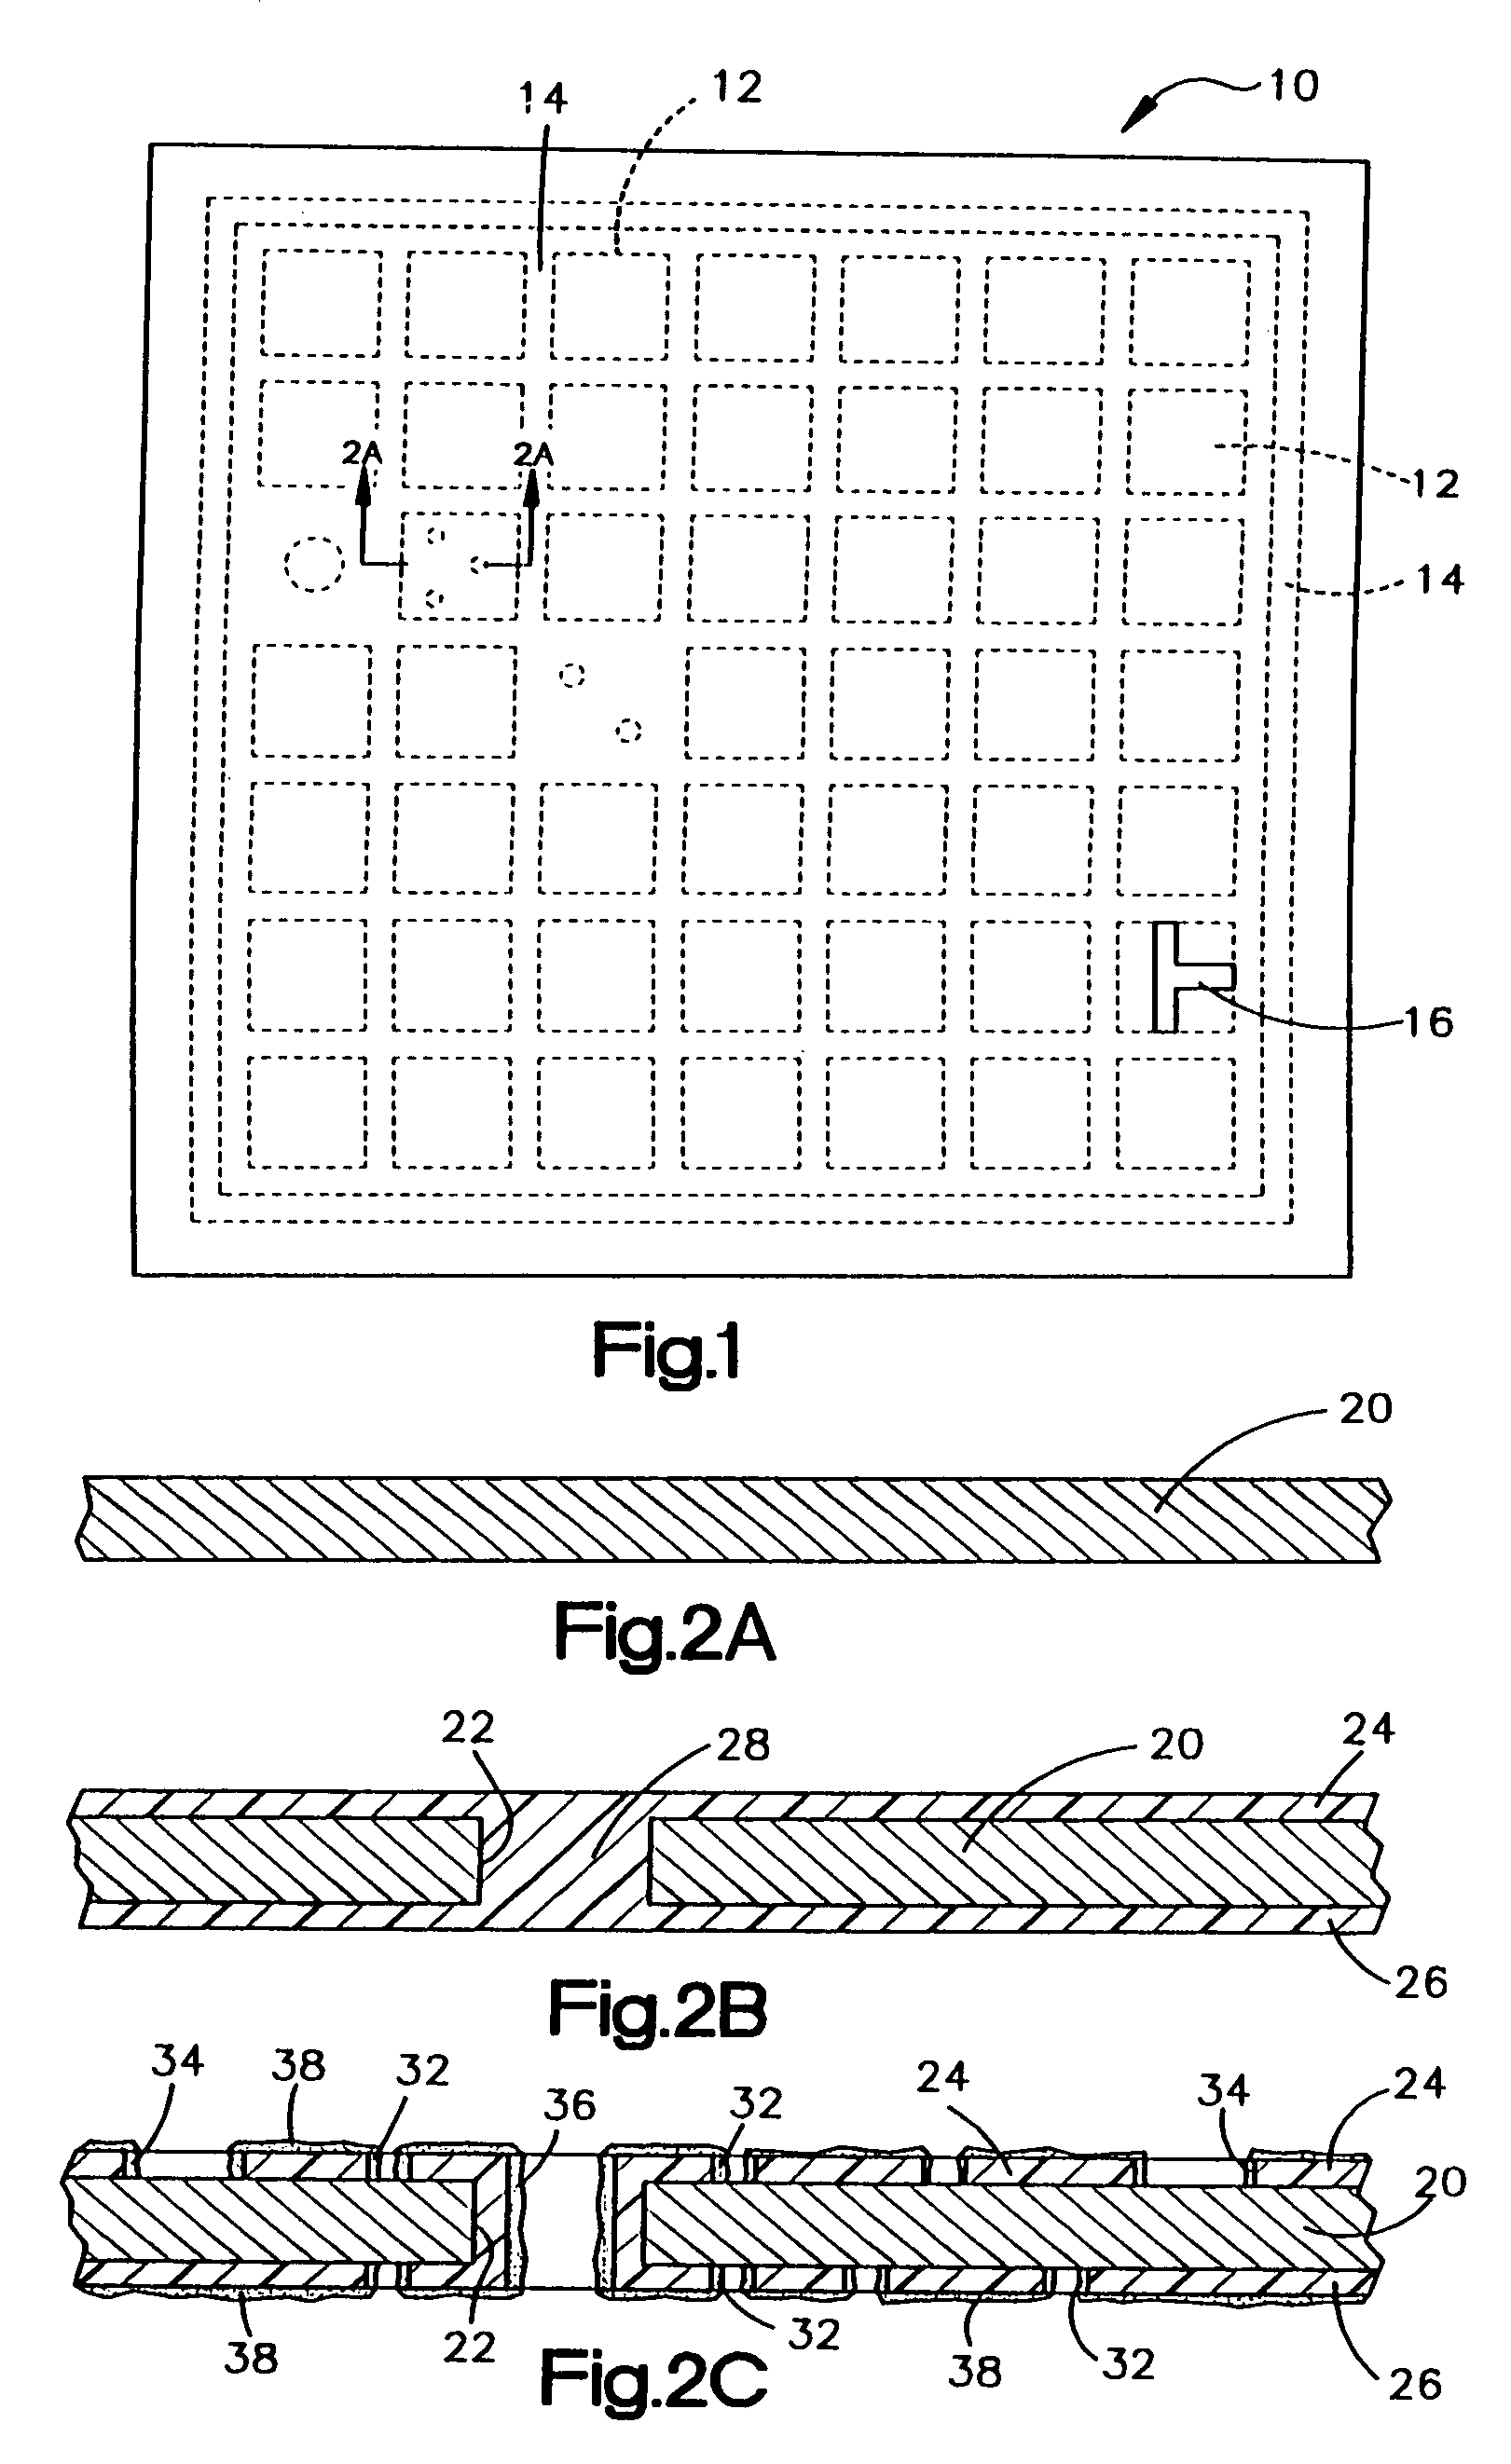 Method of forming printed circuit card